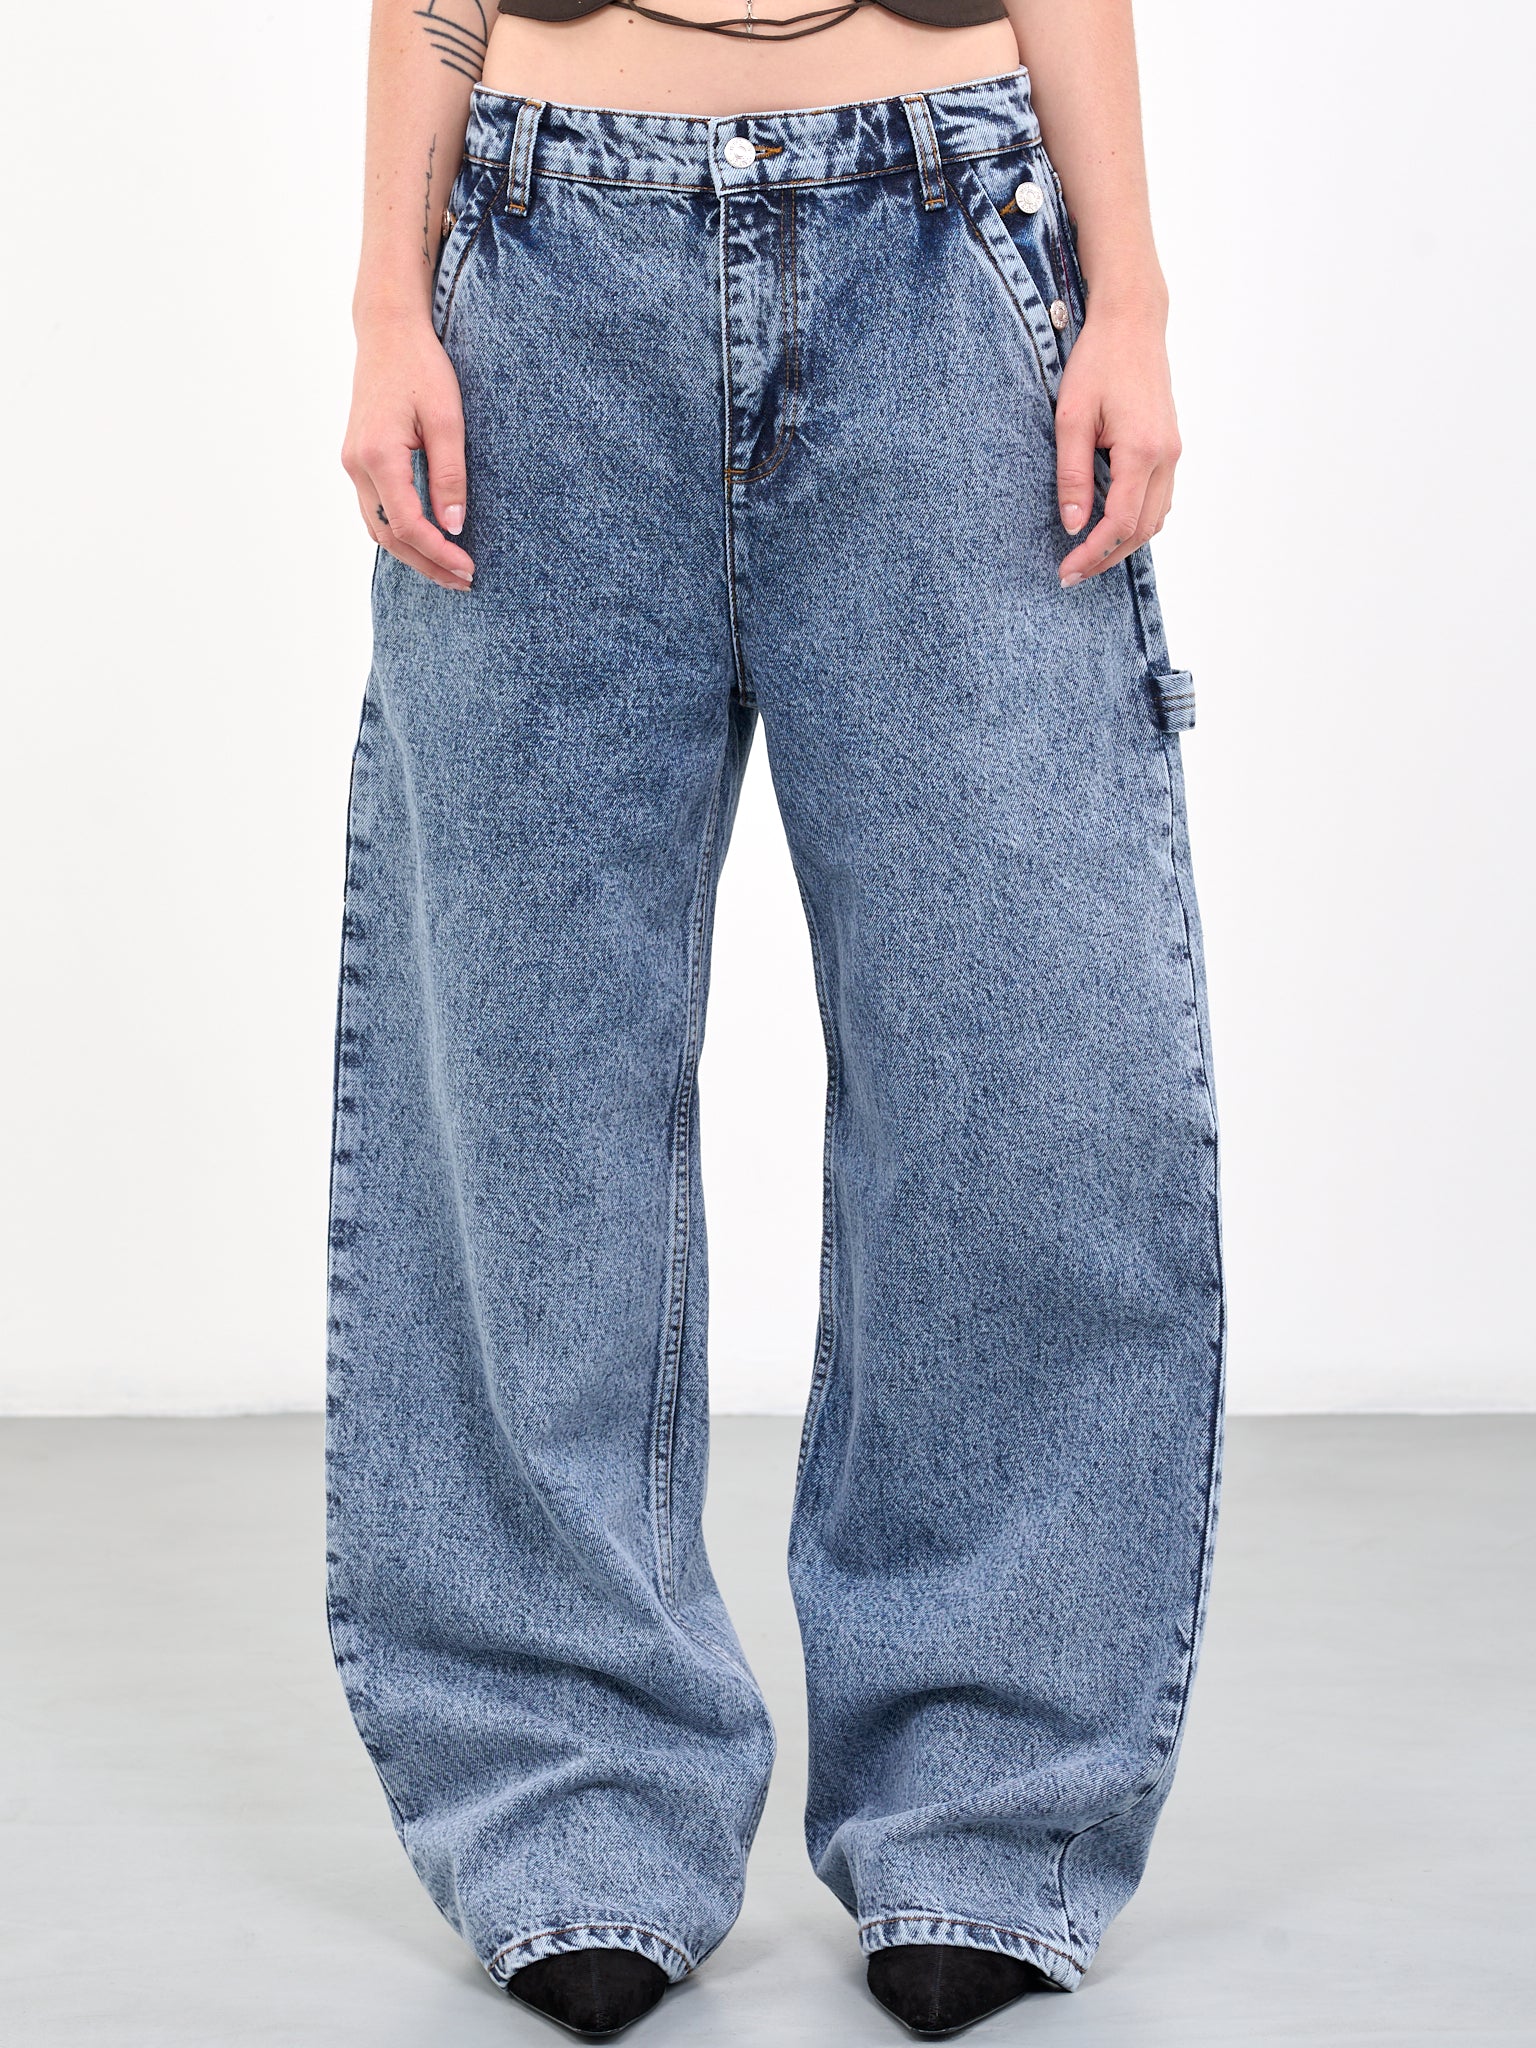 Patou | Iconic denim trousers